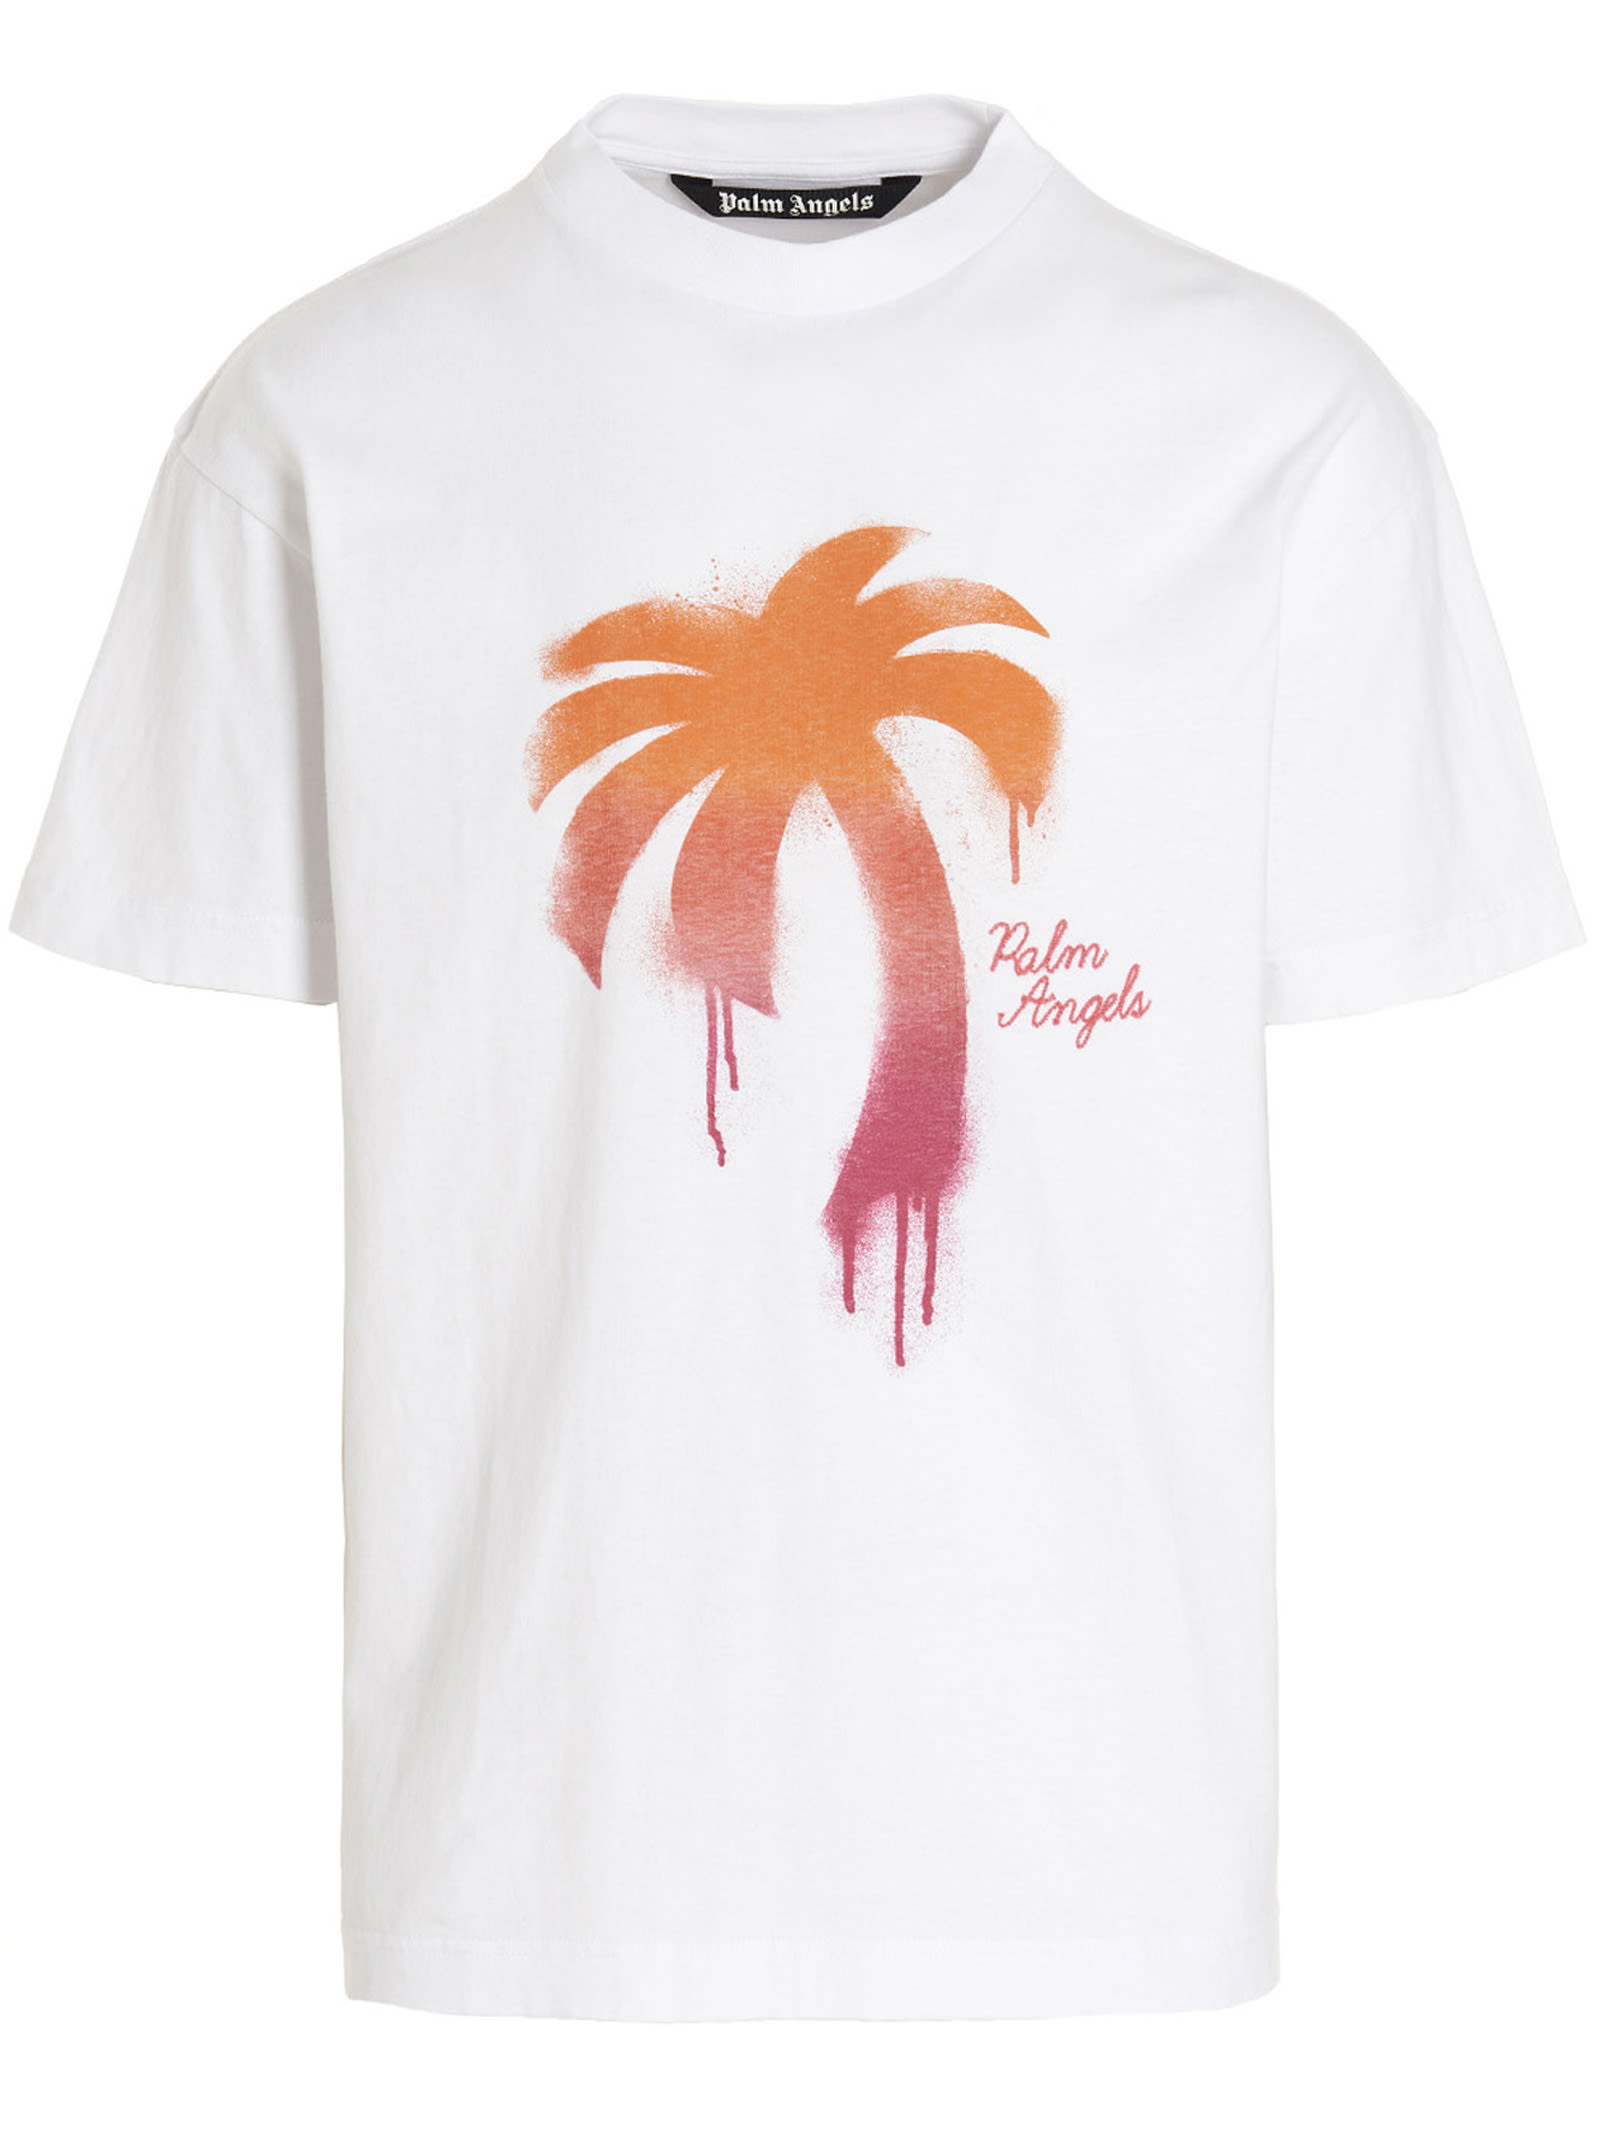 Palm Angels T-shirt the Palm